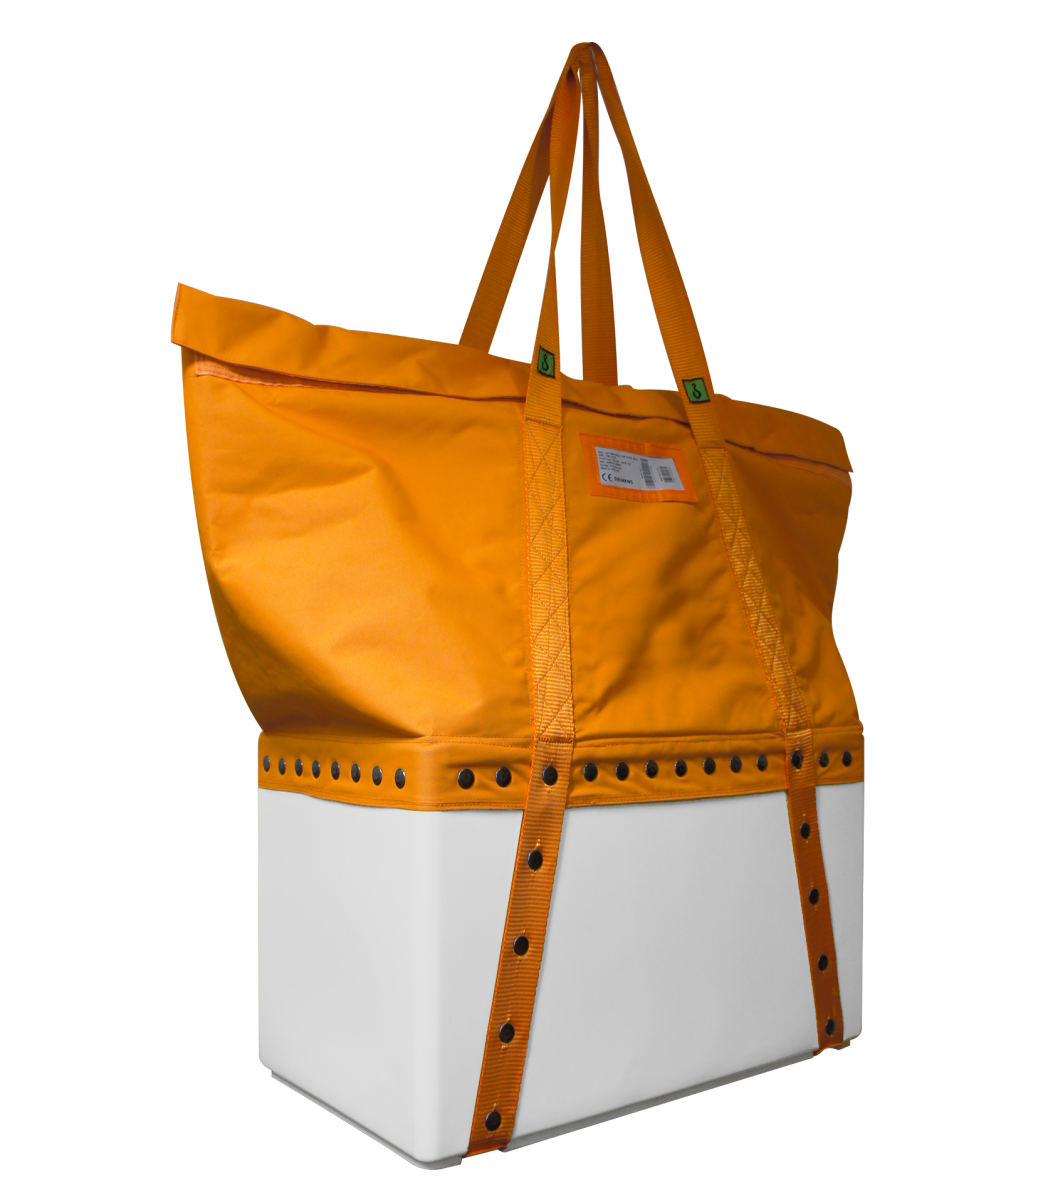 EMG Solid Casted Lifting Bag